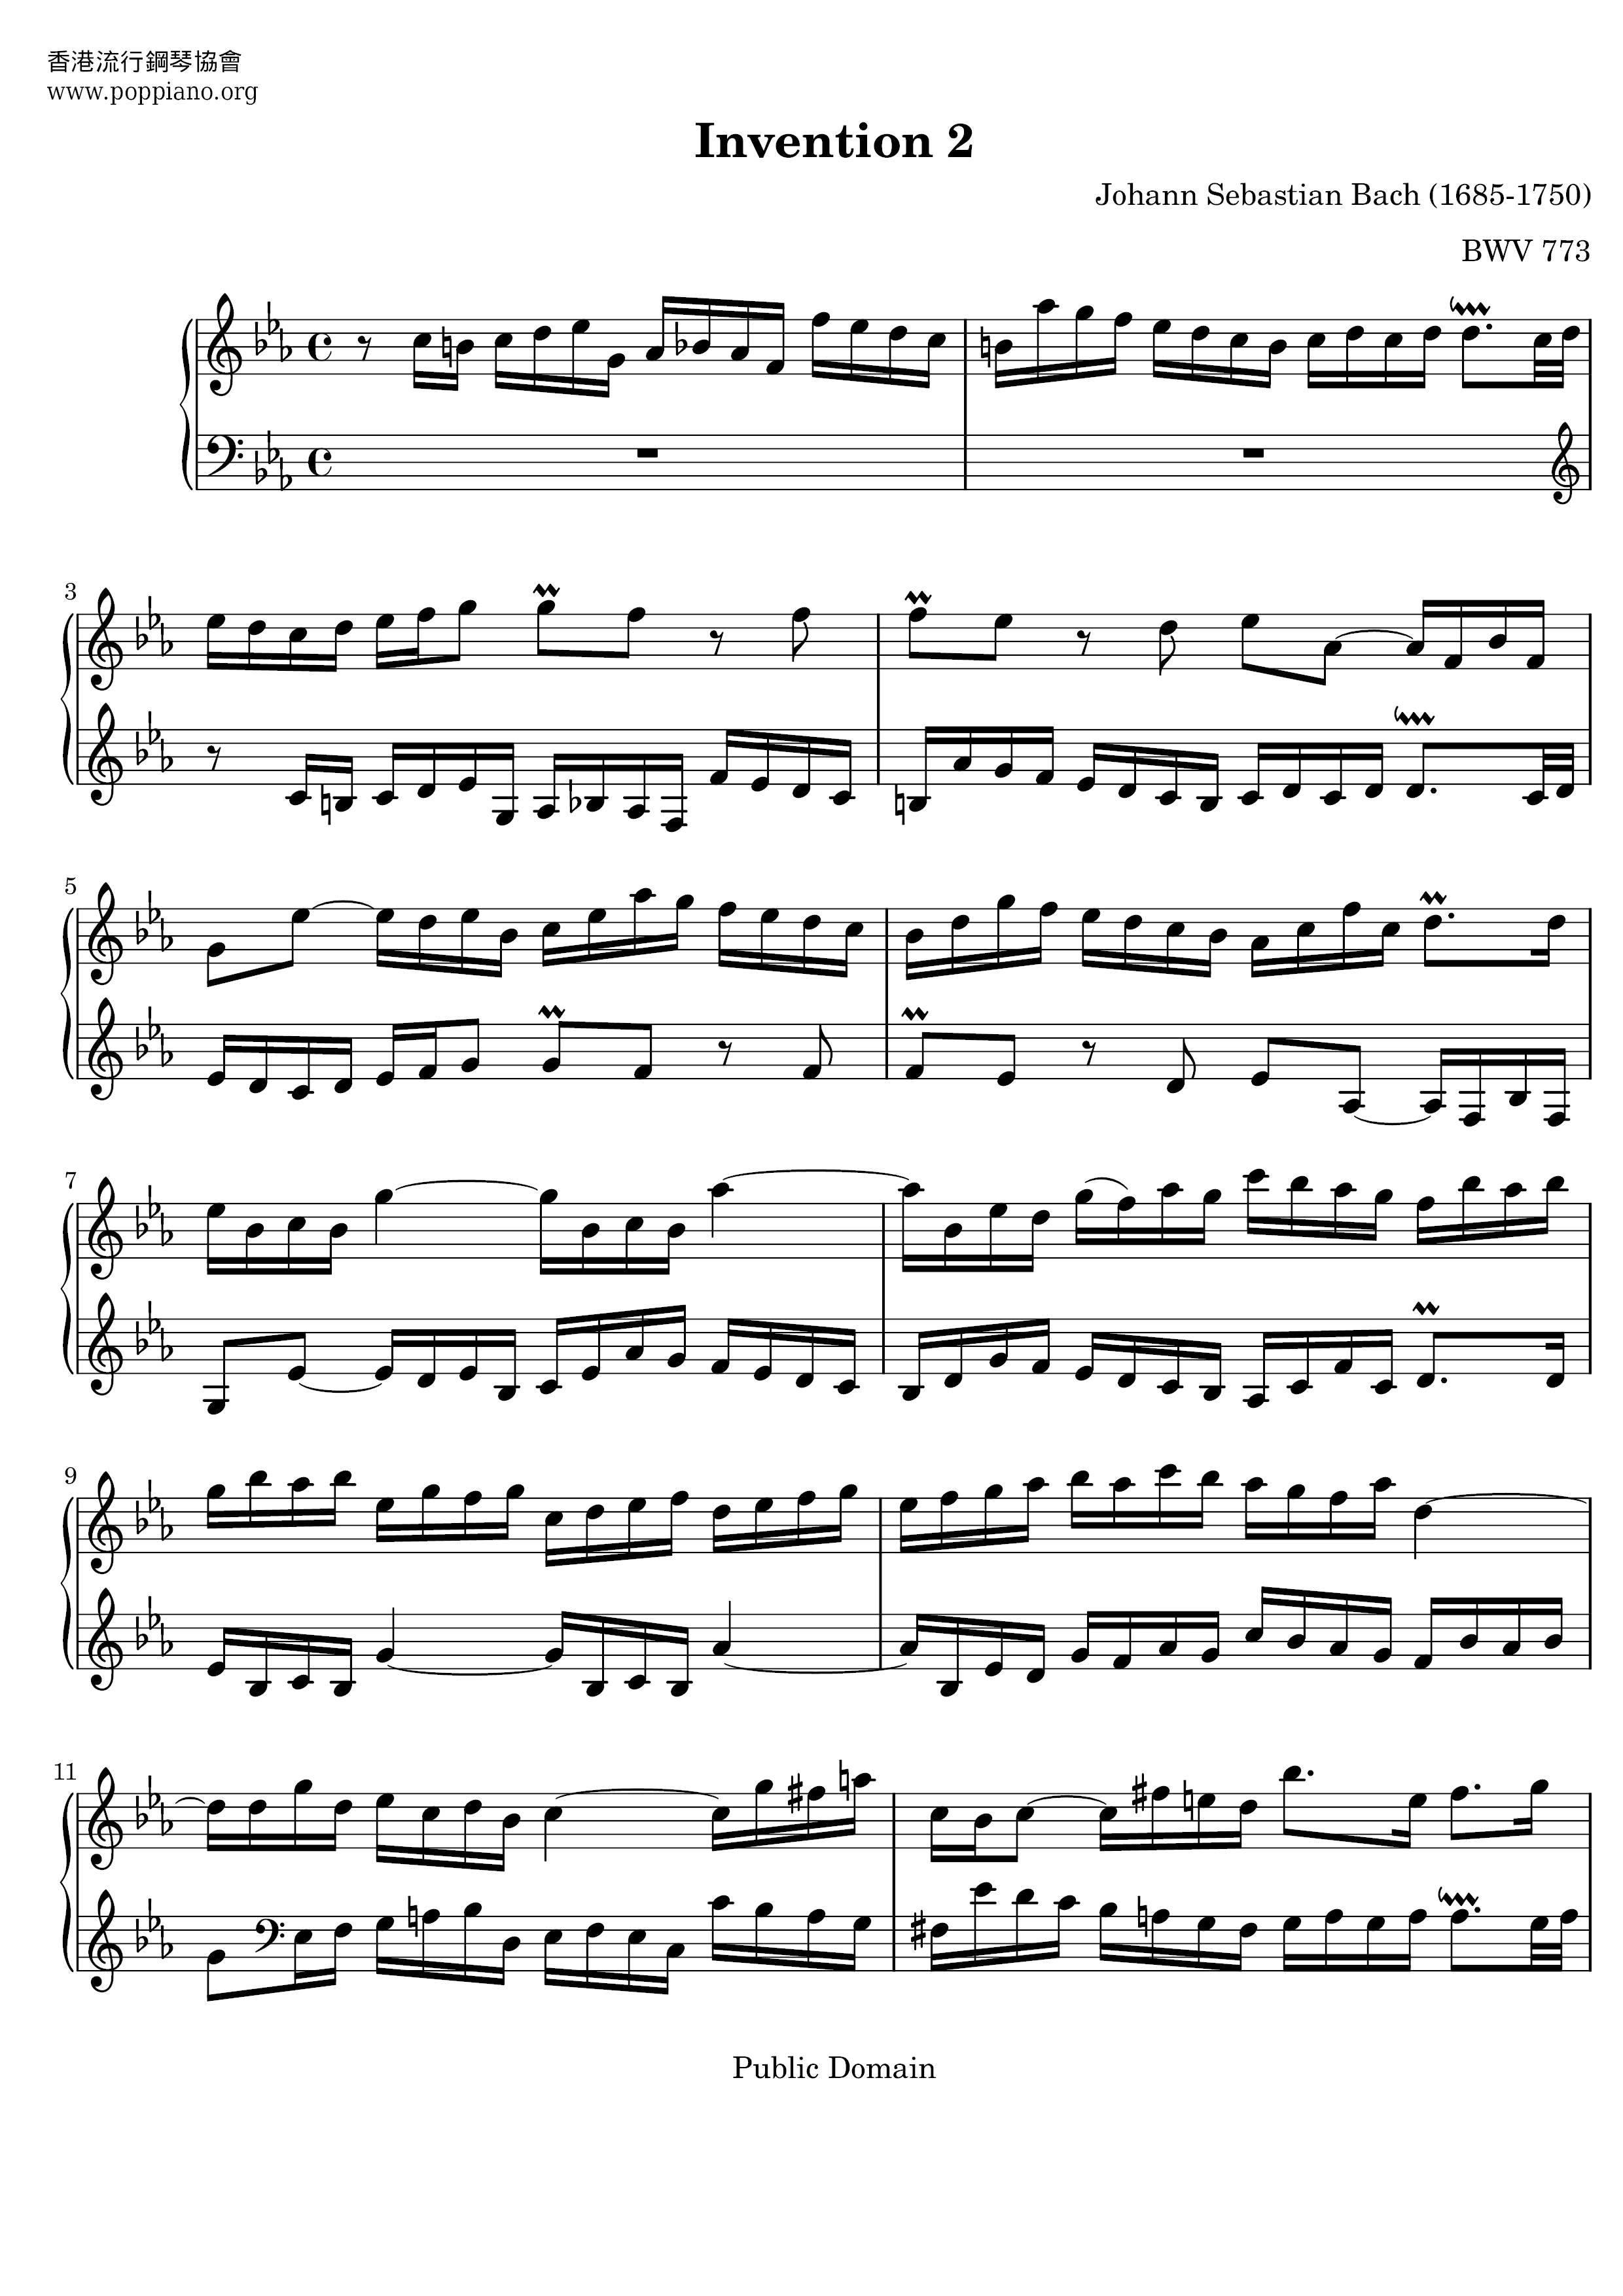 Invention 2, BWV 773ピアノ譜